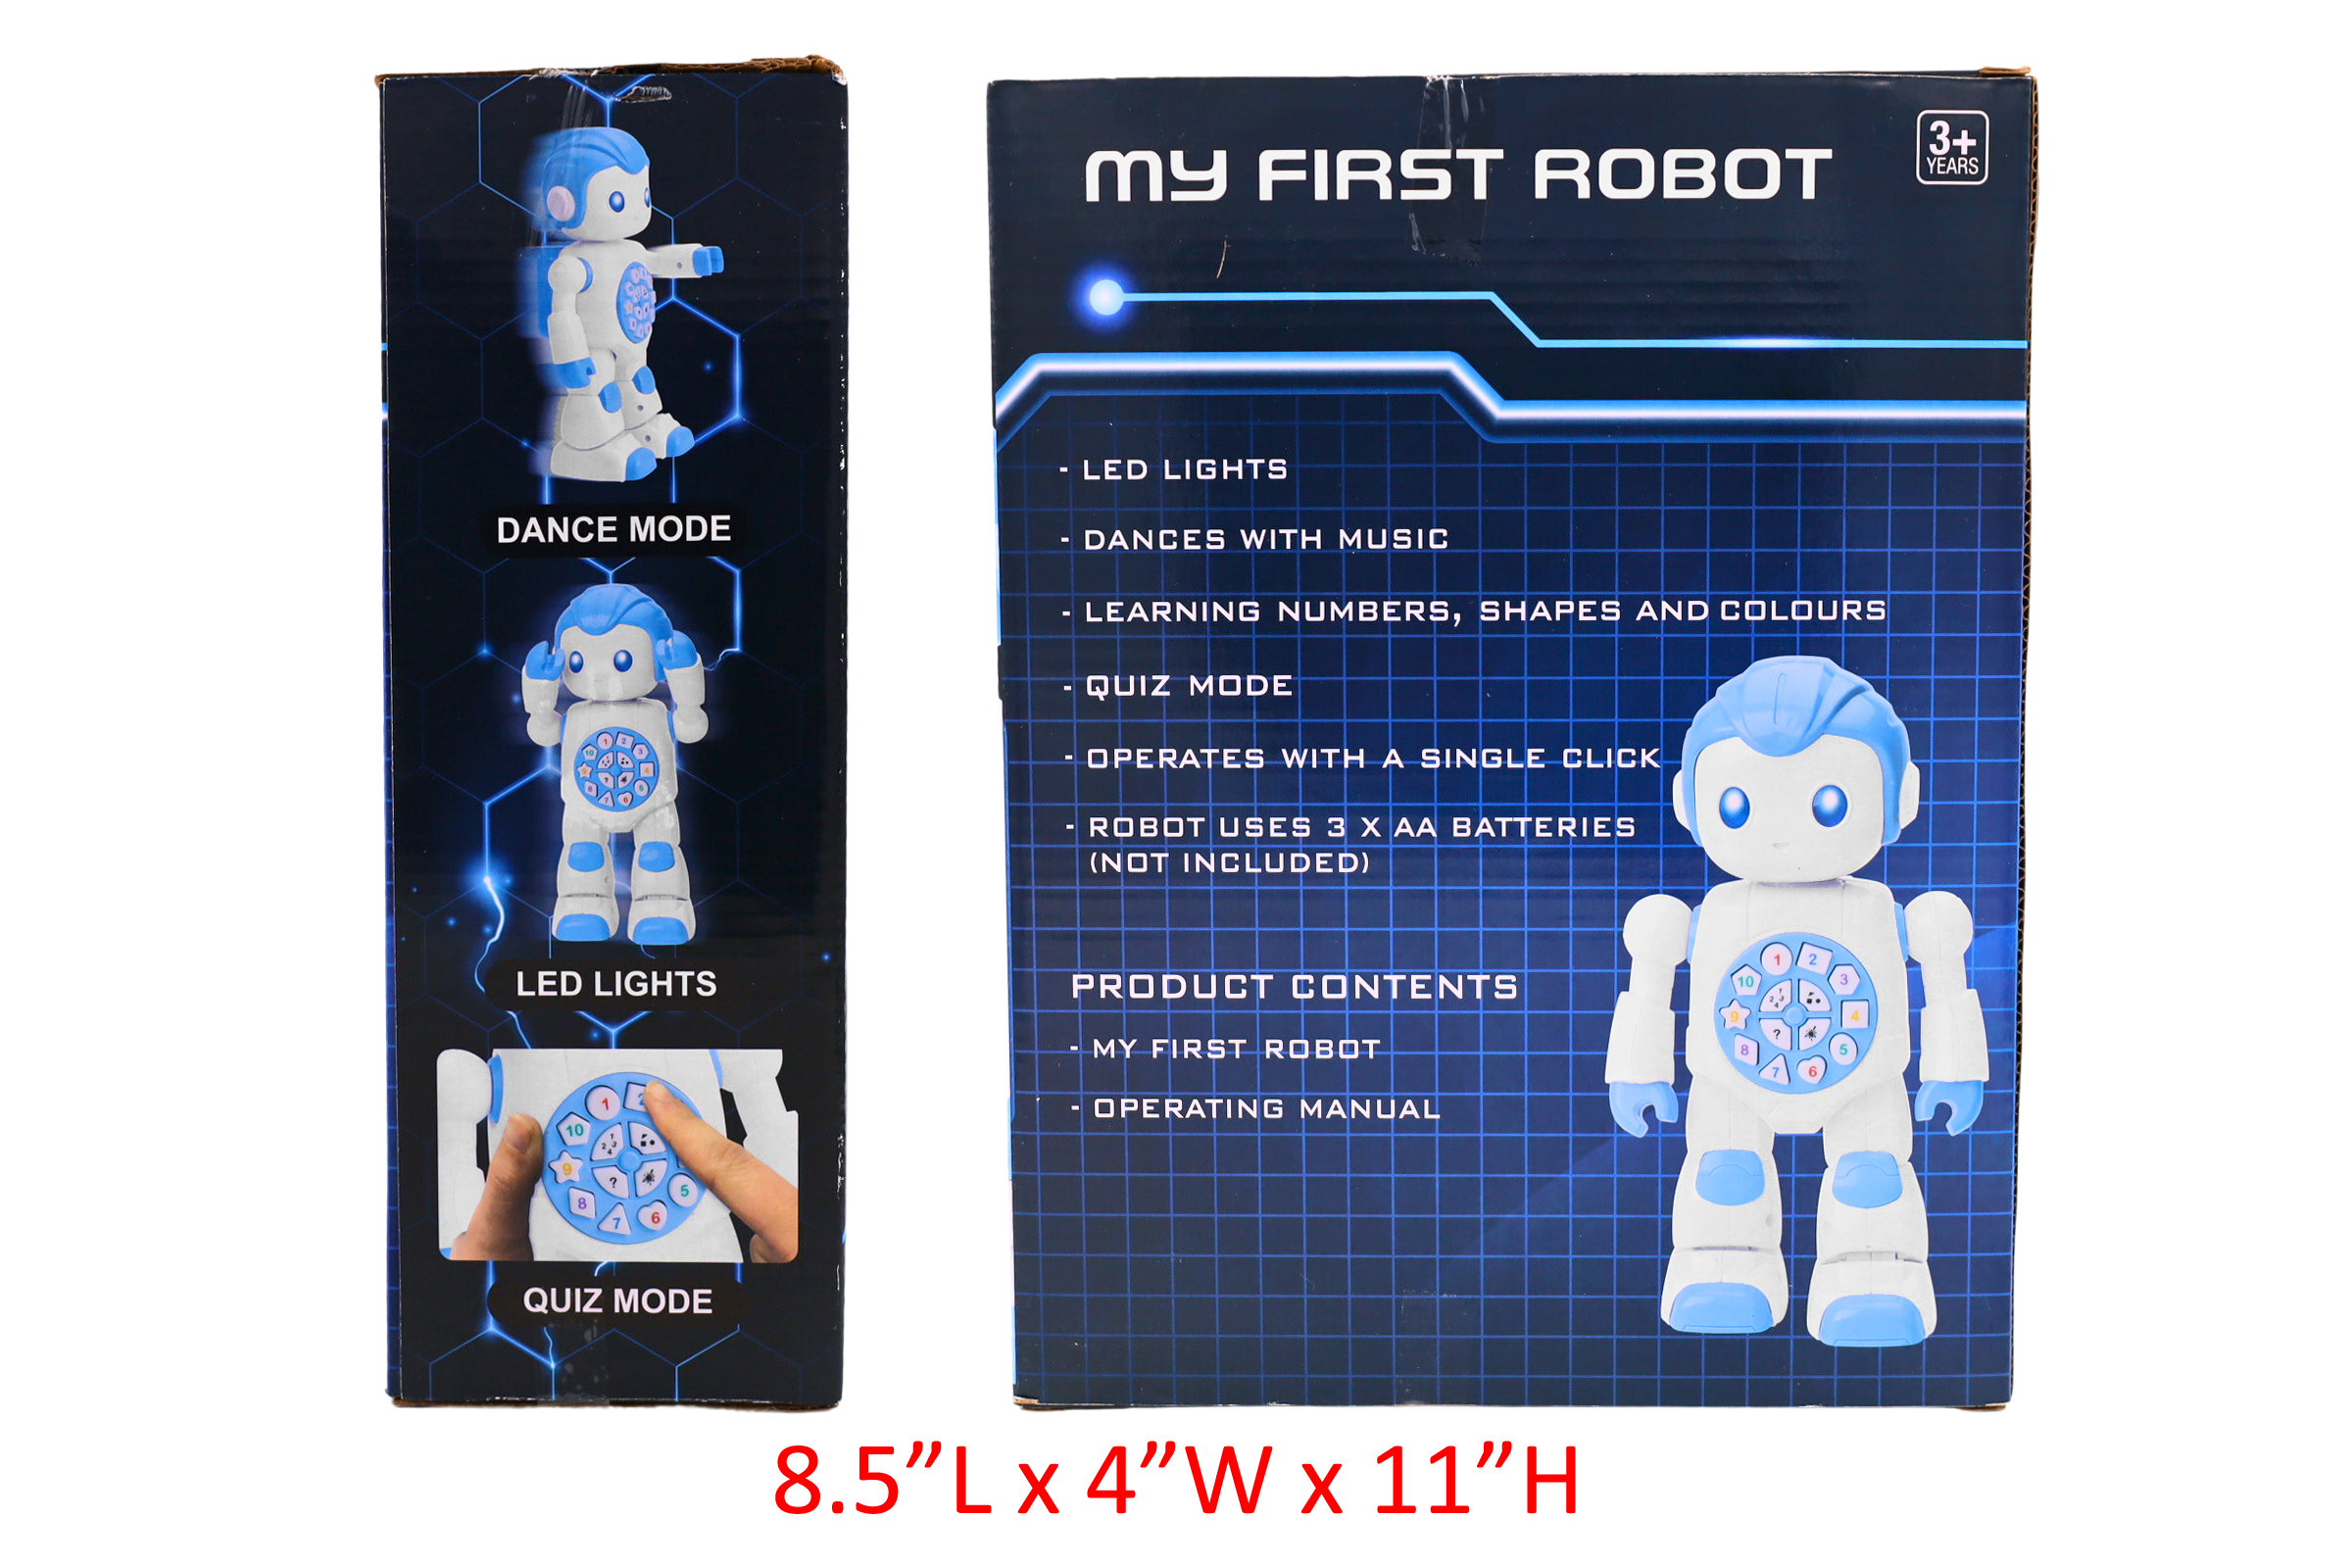 POWERMAN ROBOT - toys & games - by owner - sale - craigslist